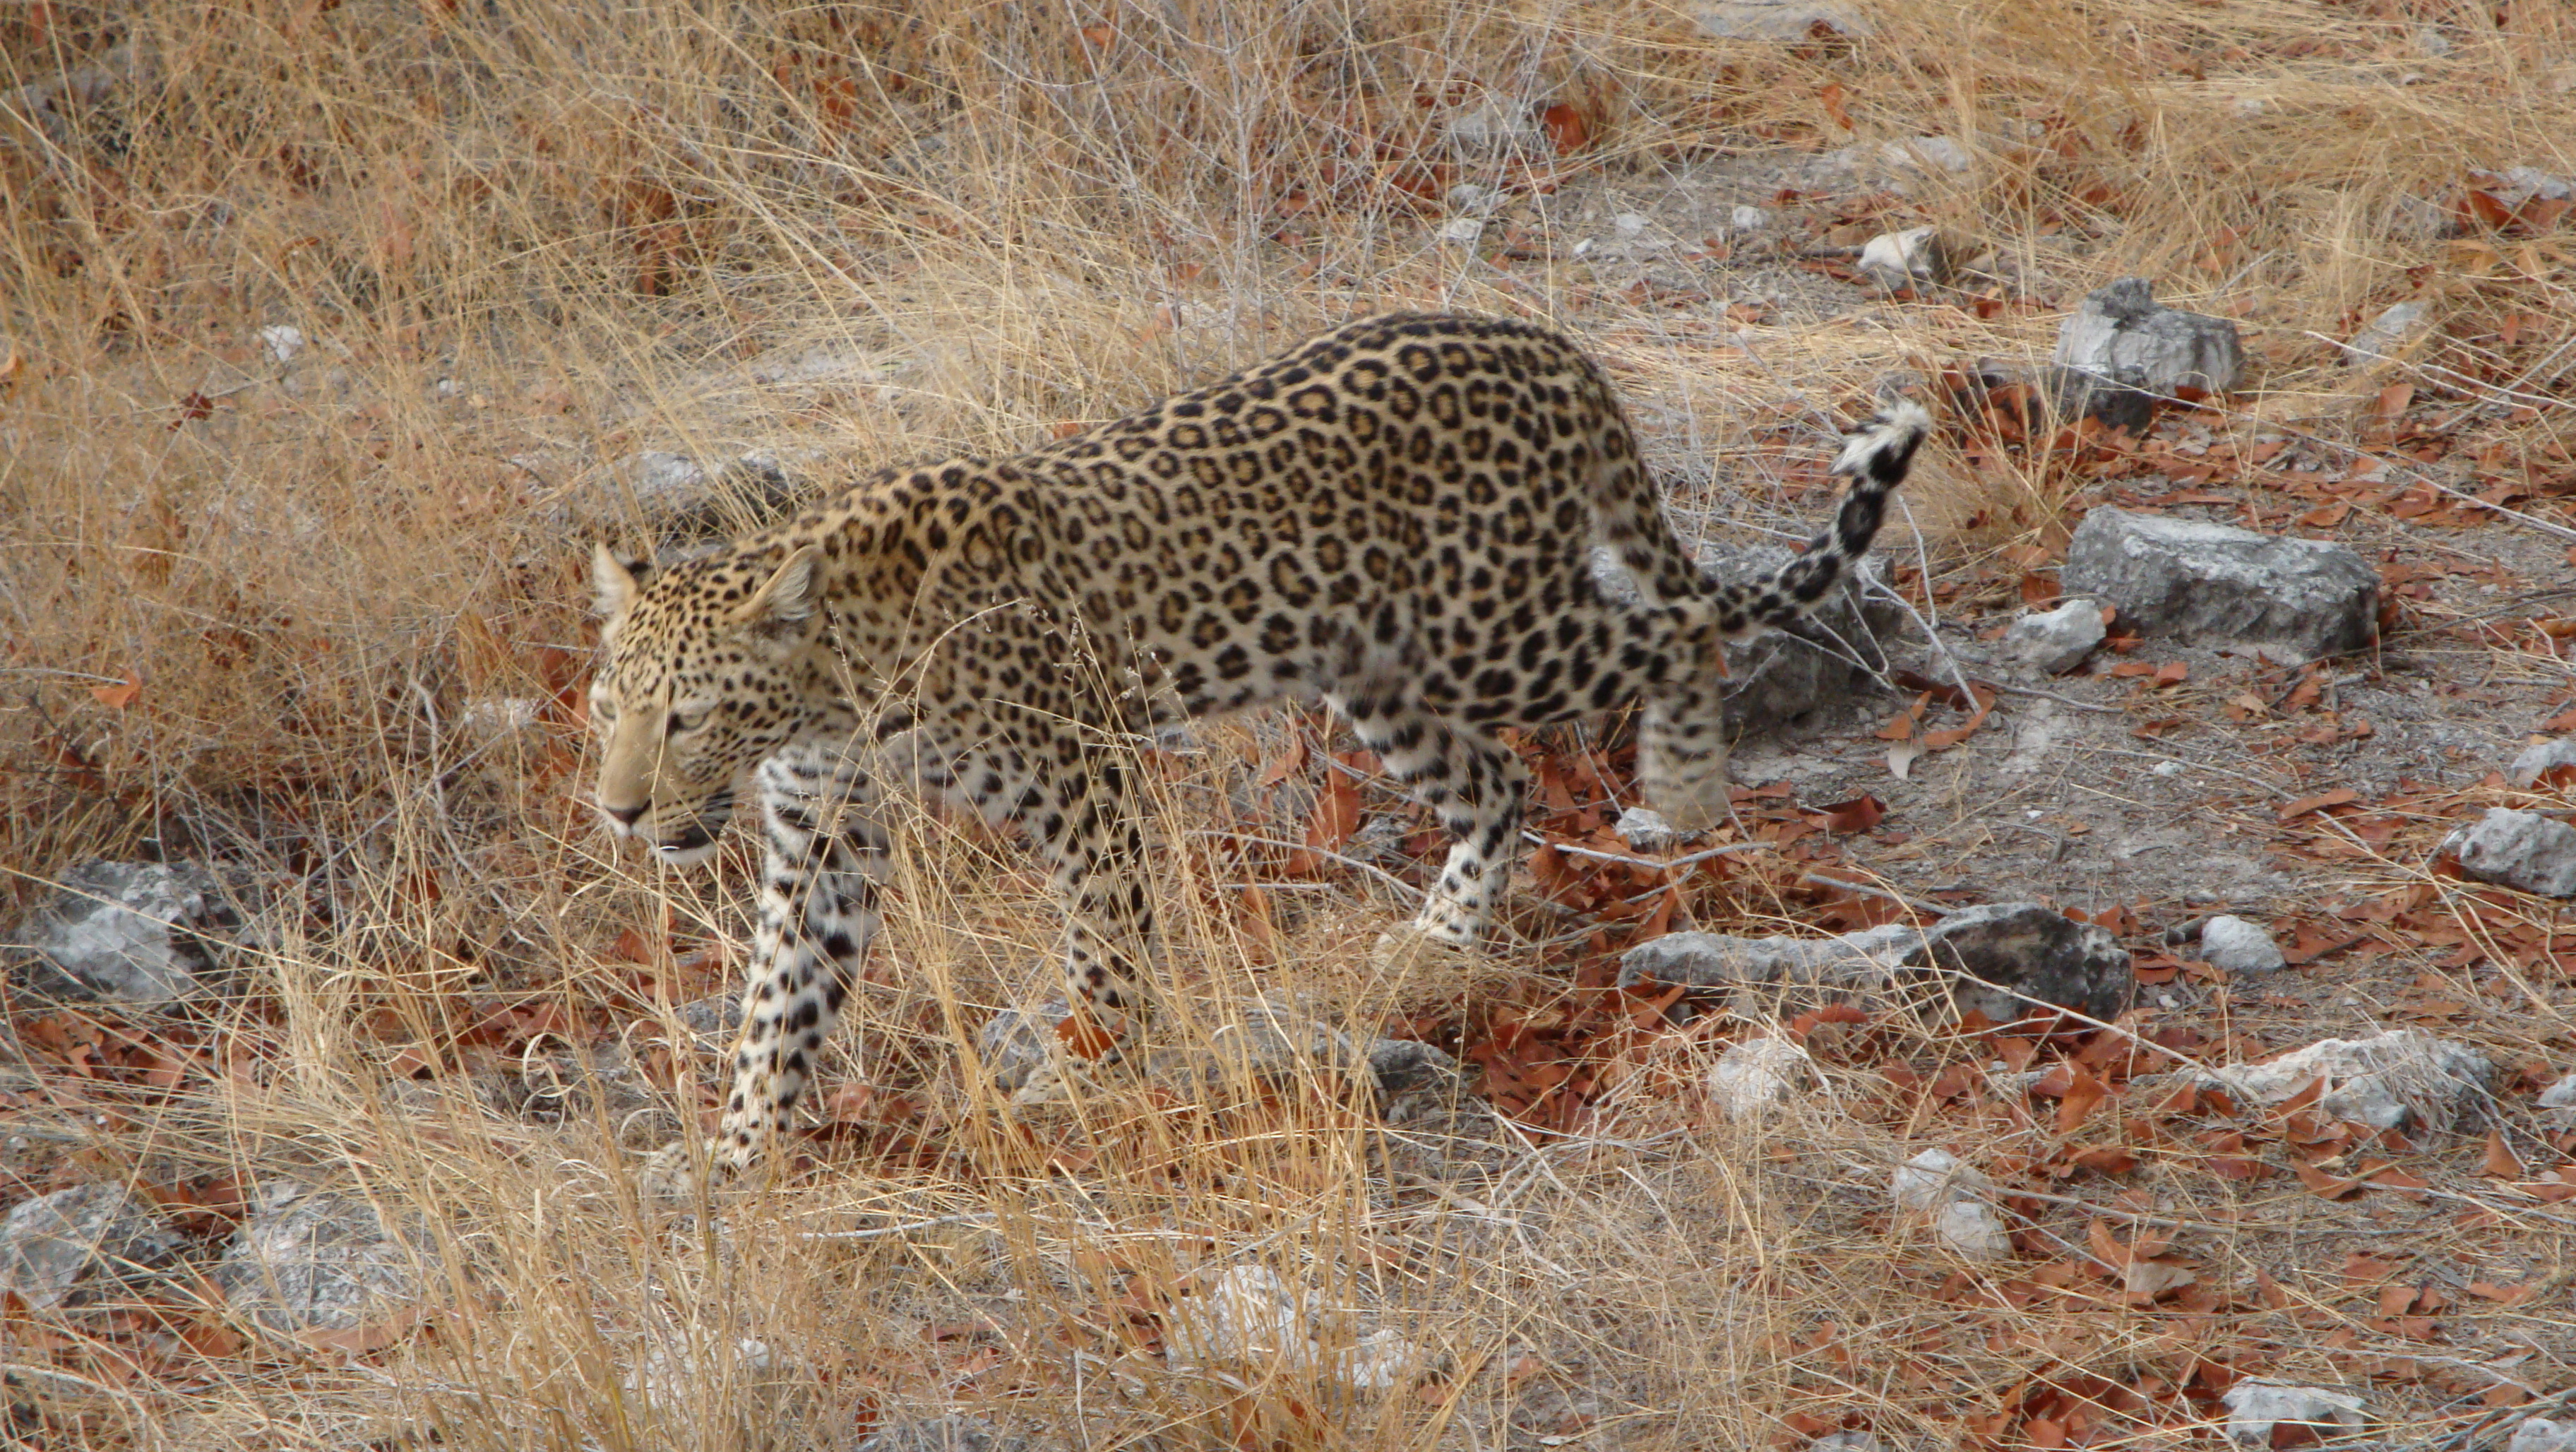 Afrika Urlaub mit Leopard: Safari in Namibias Etosha Nationalpark